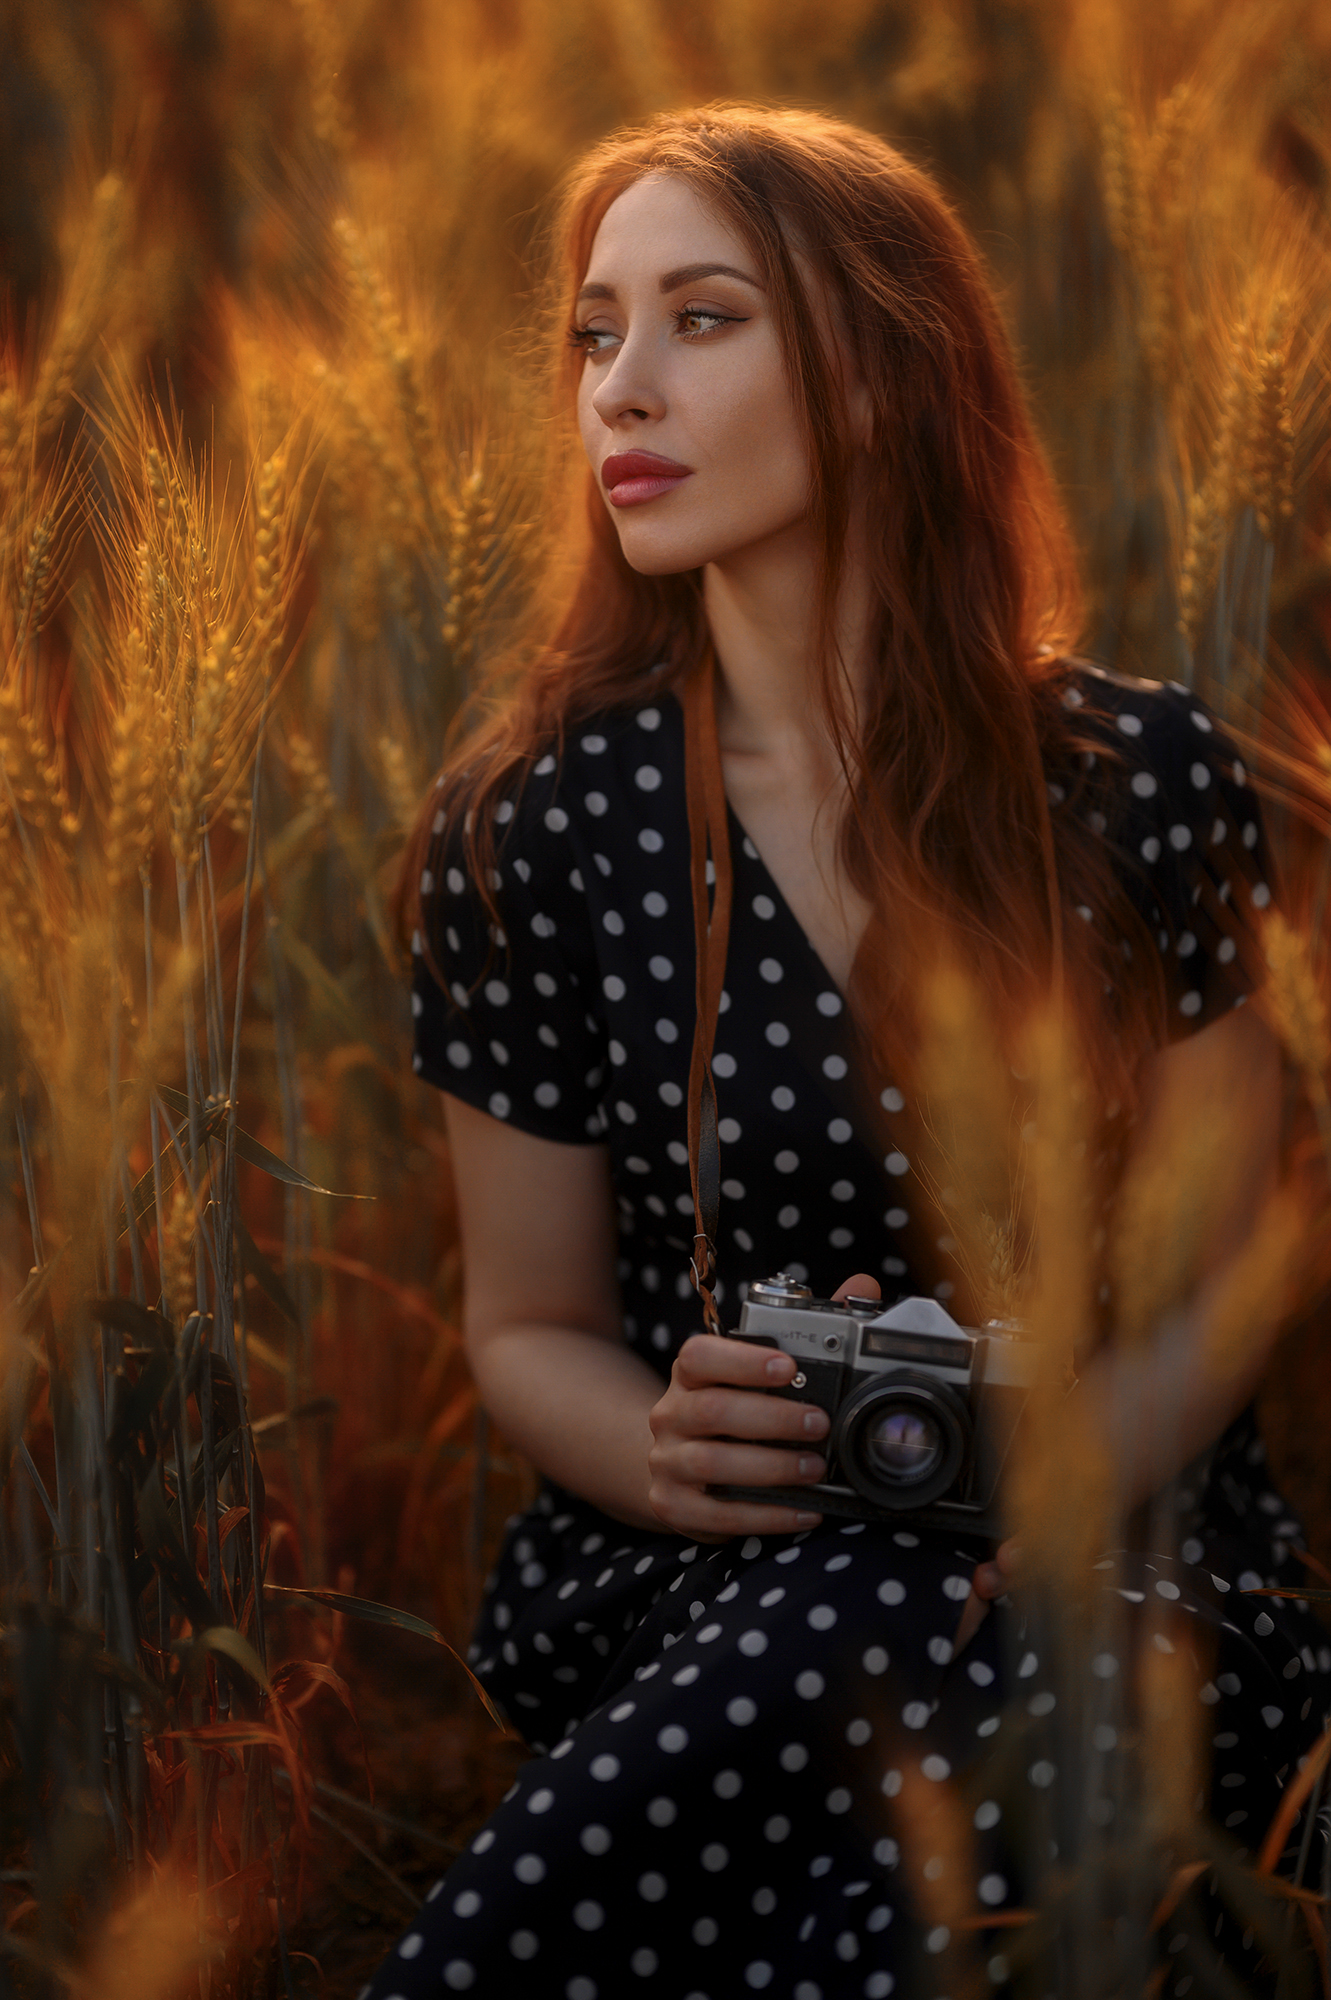 Elena Zharkova Women Redhead Long Hair Dress Dots Field Warm Fall Camera Makeup Looking Away Juicy L 1331x2000